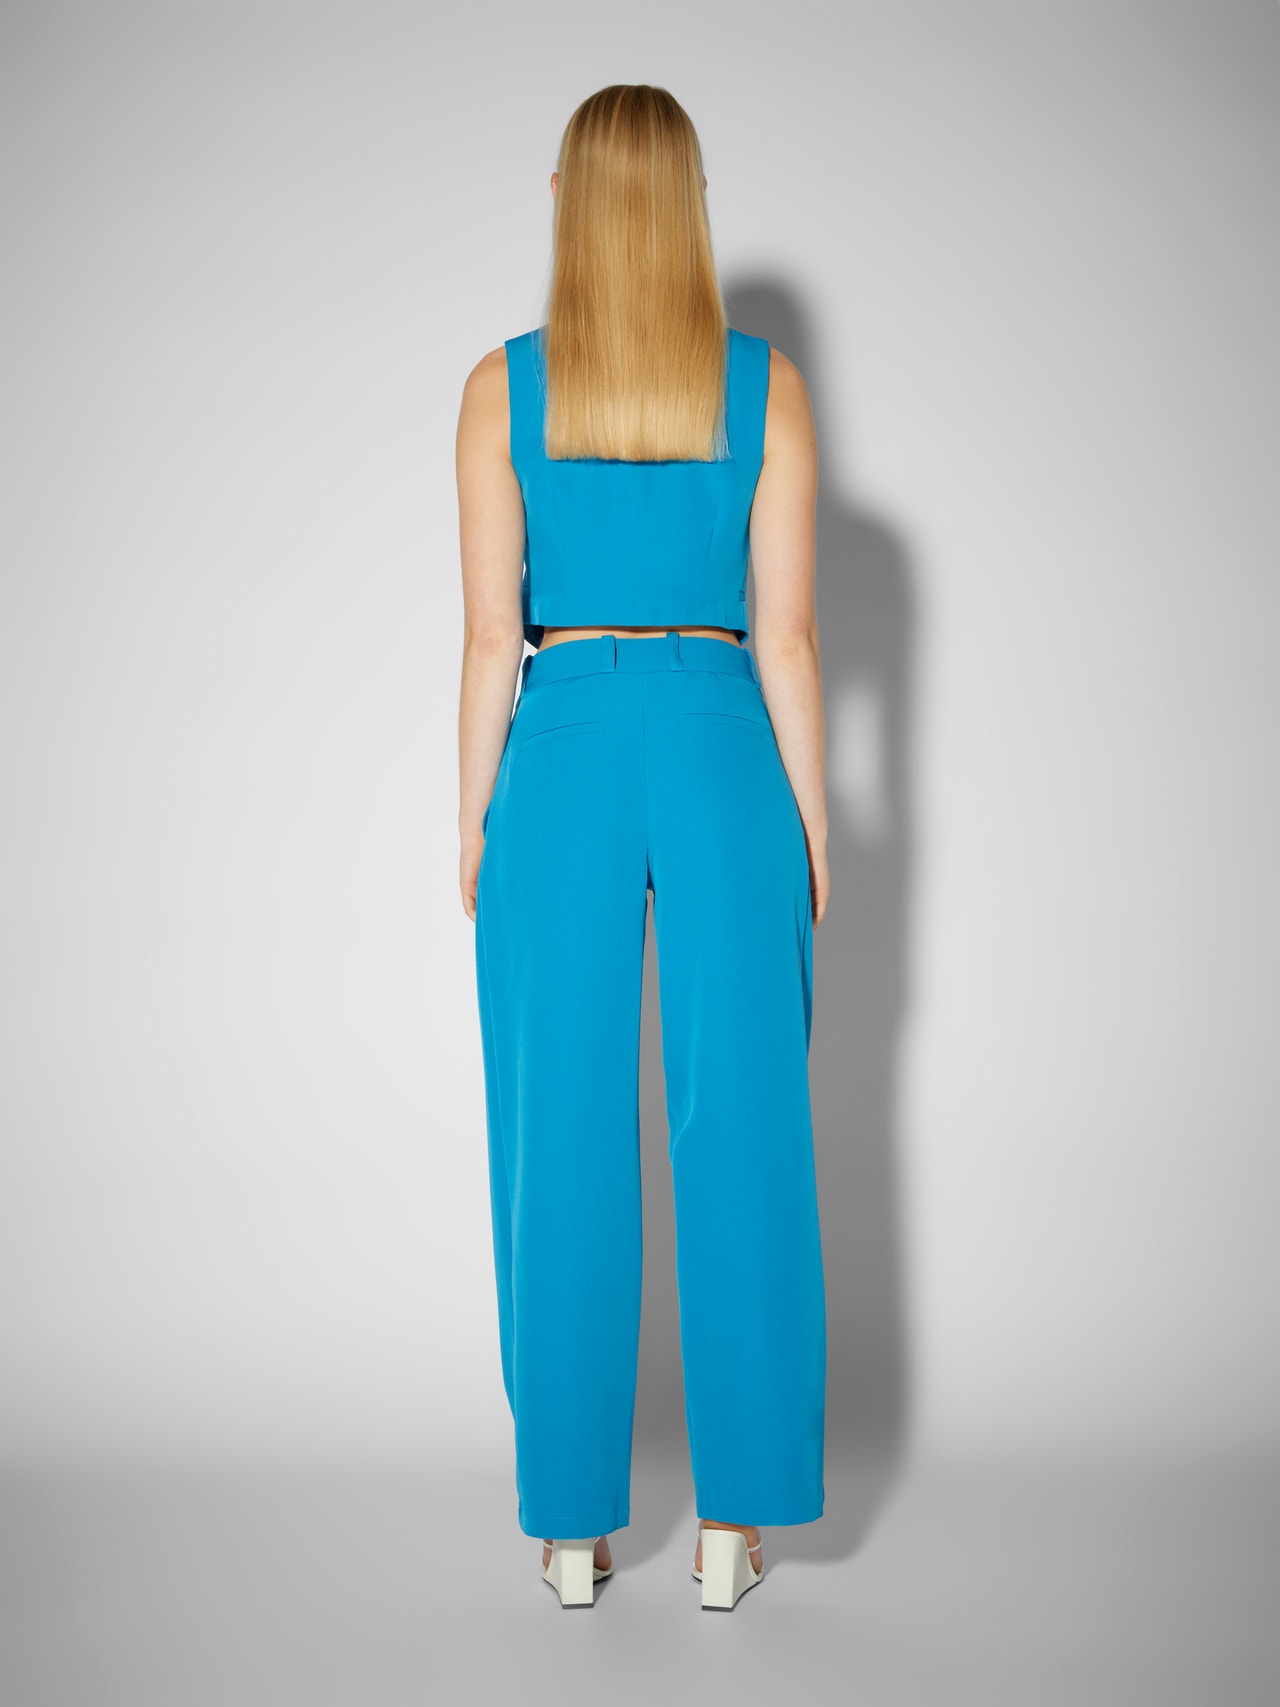 Vero Moda Trousers -Blue Jewel - 10280573